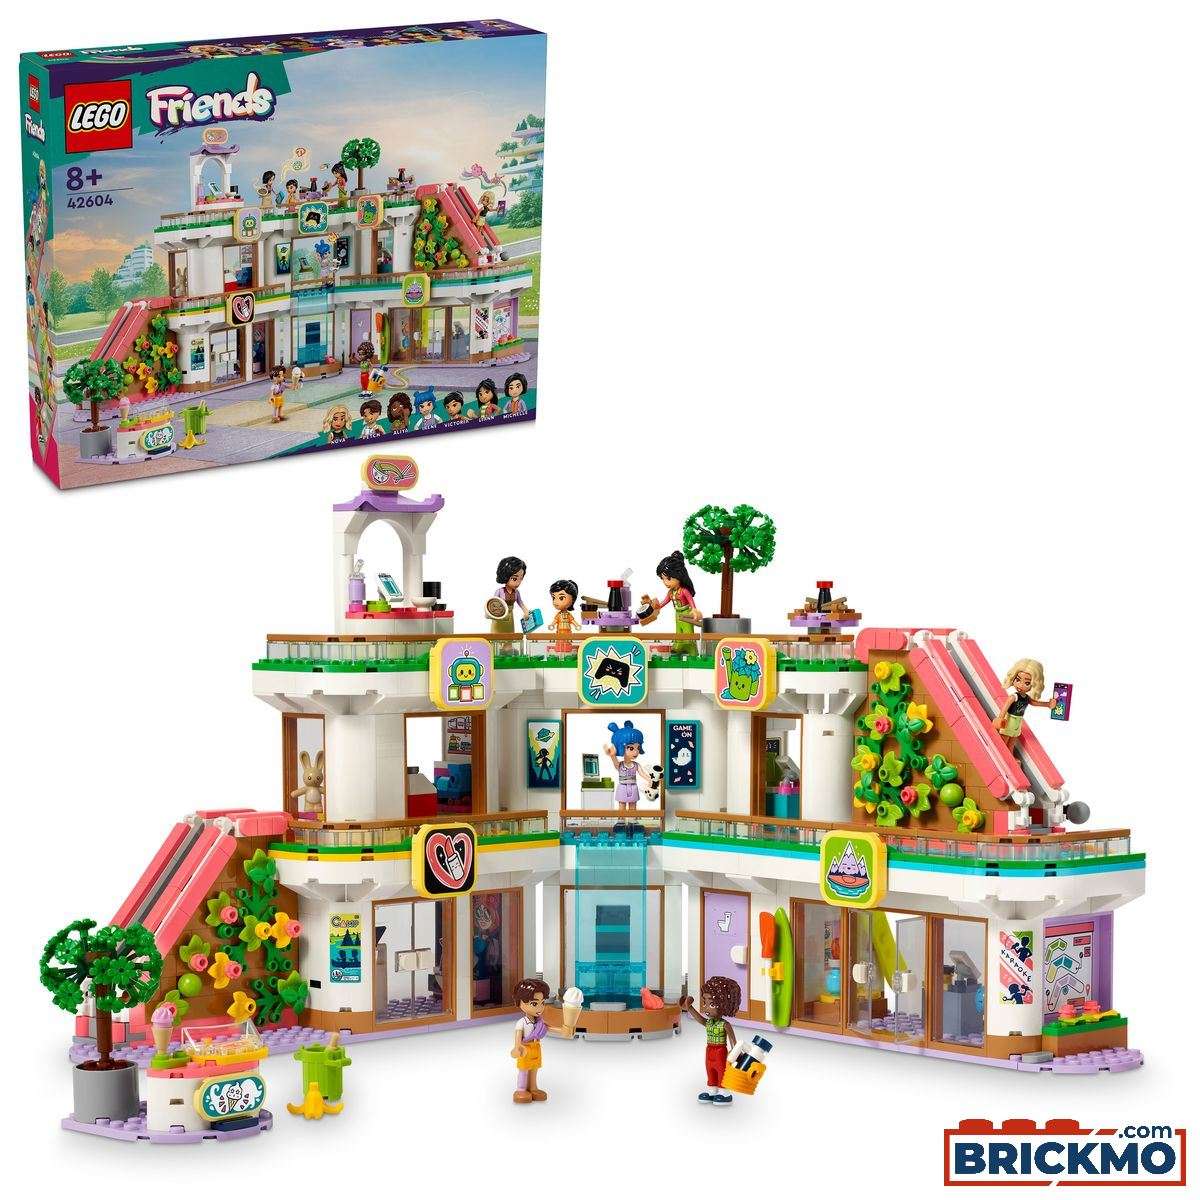 LEGO Friends 42604 Heartlake City Kaufhaus 42604